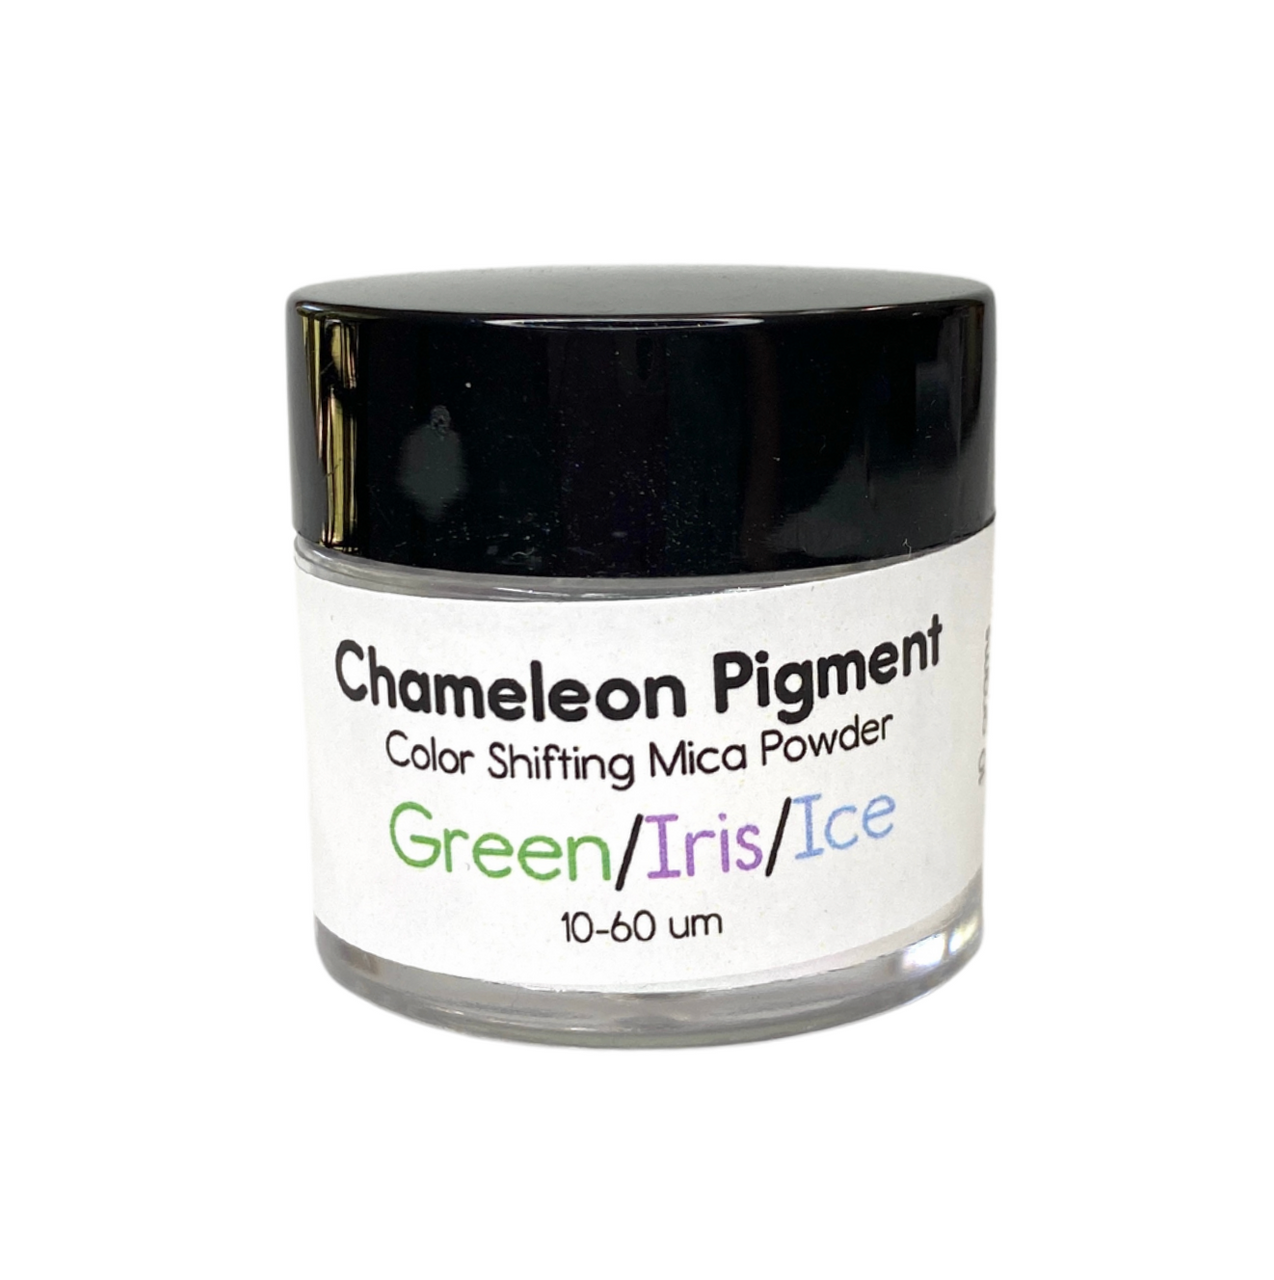 10g/pcs Dv series Cosmetics Chameleon Pigment Color Shift Mica